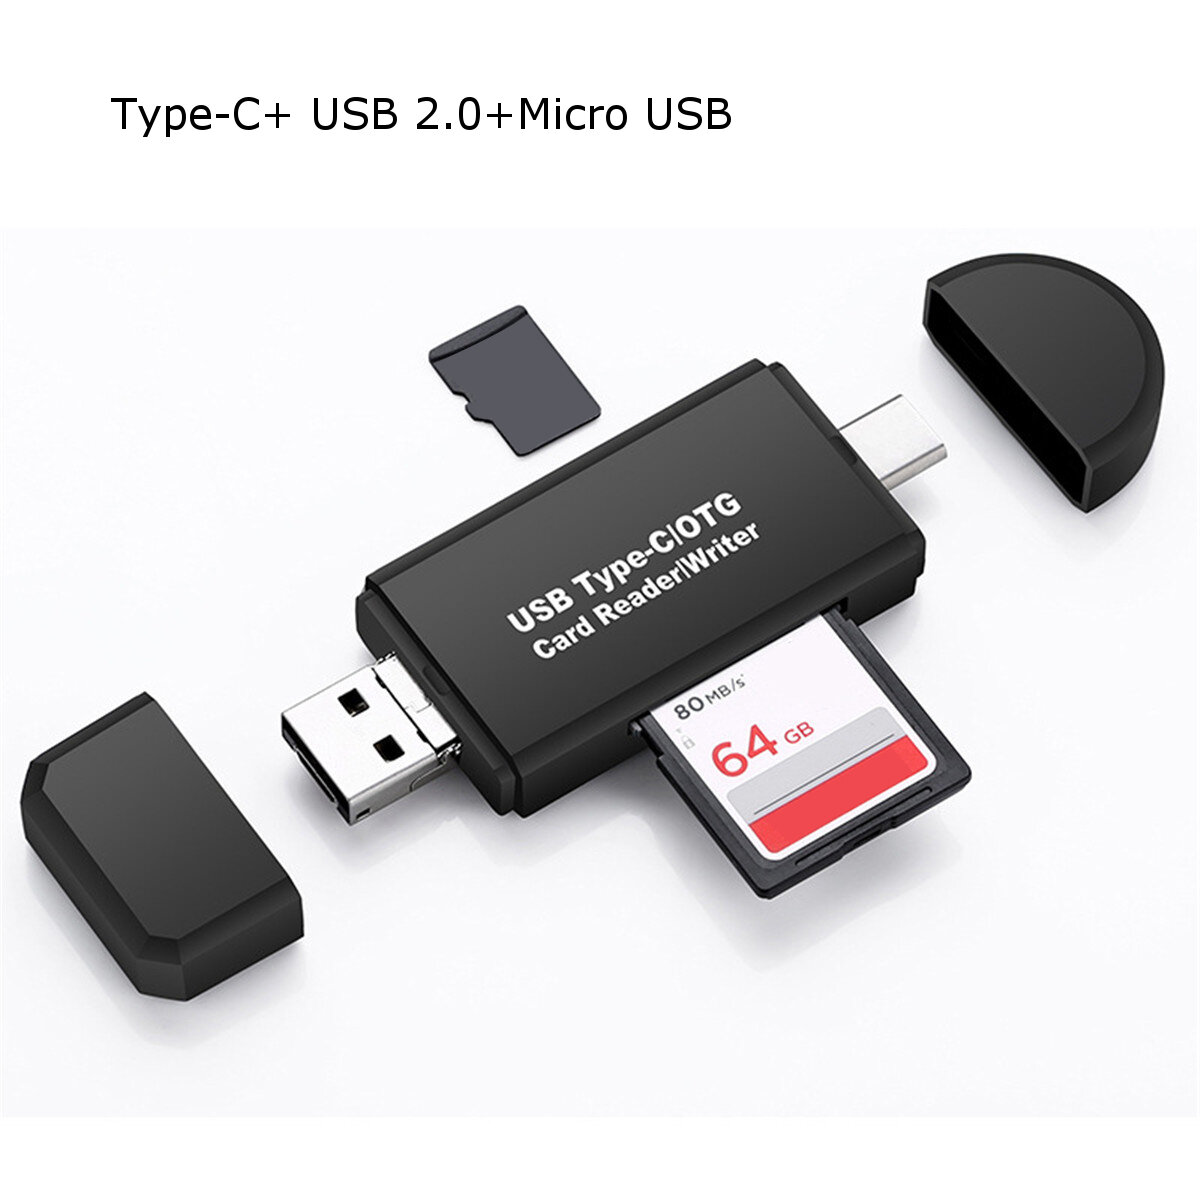 USB Type-C/OTG SD card reader